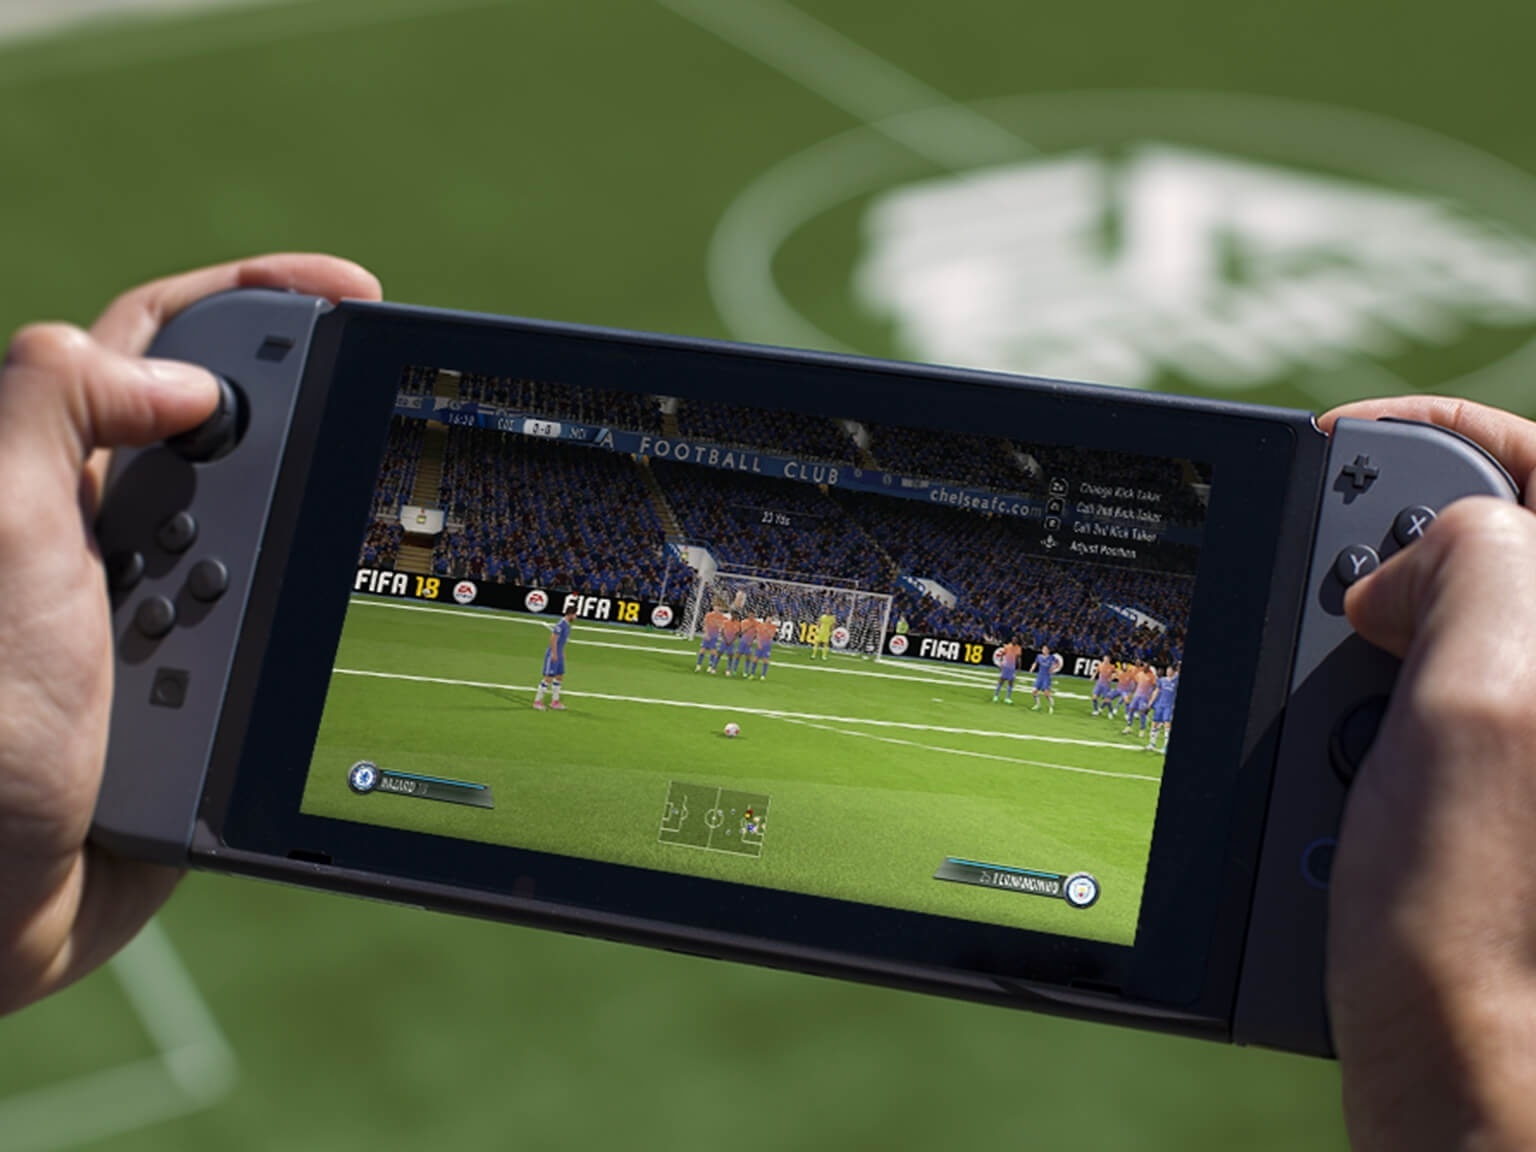 Fifa 23 - PS4 Mídia Física - Mundo Joy Games - Venda, Compra e